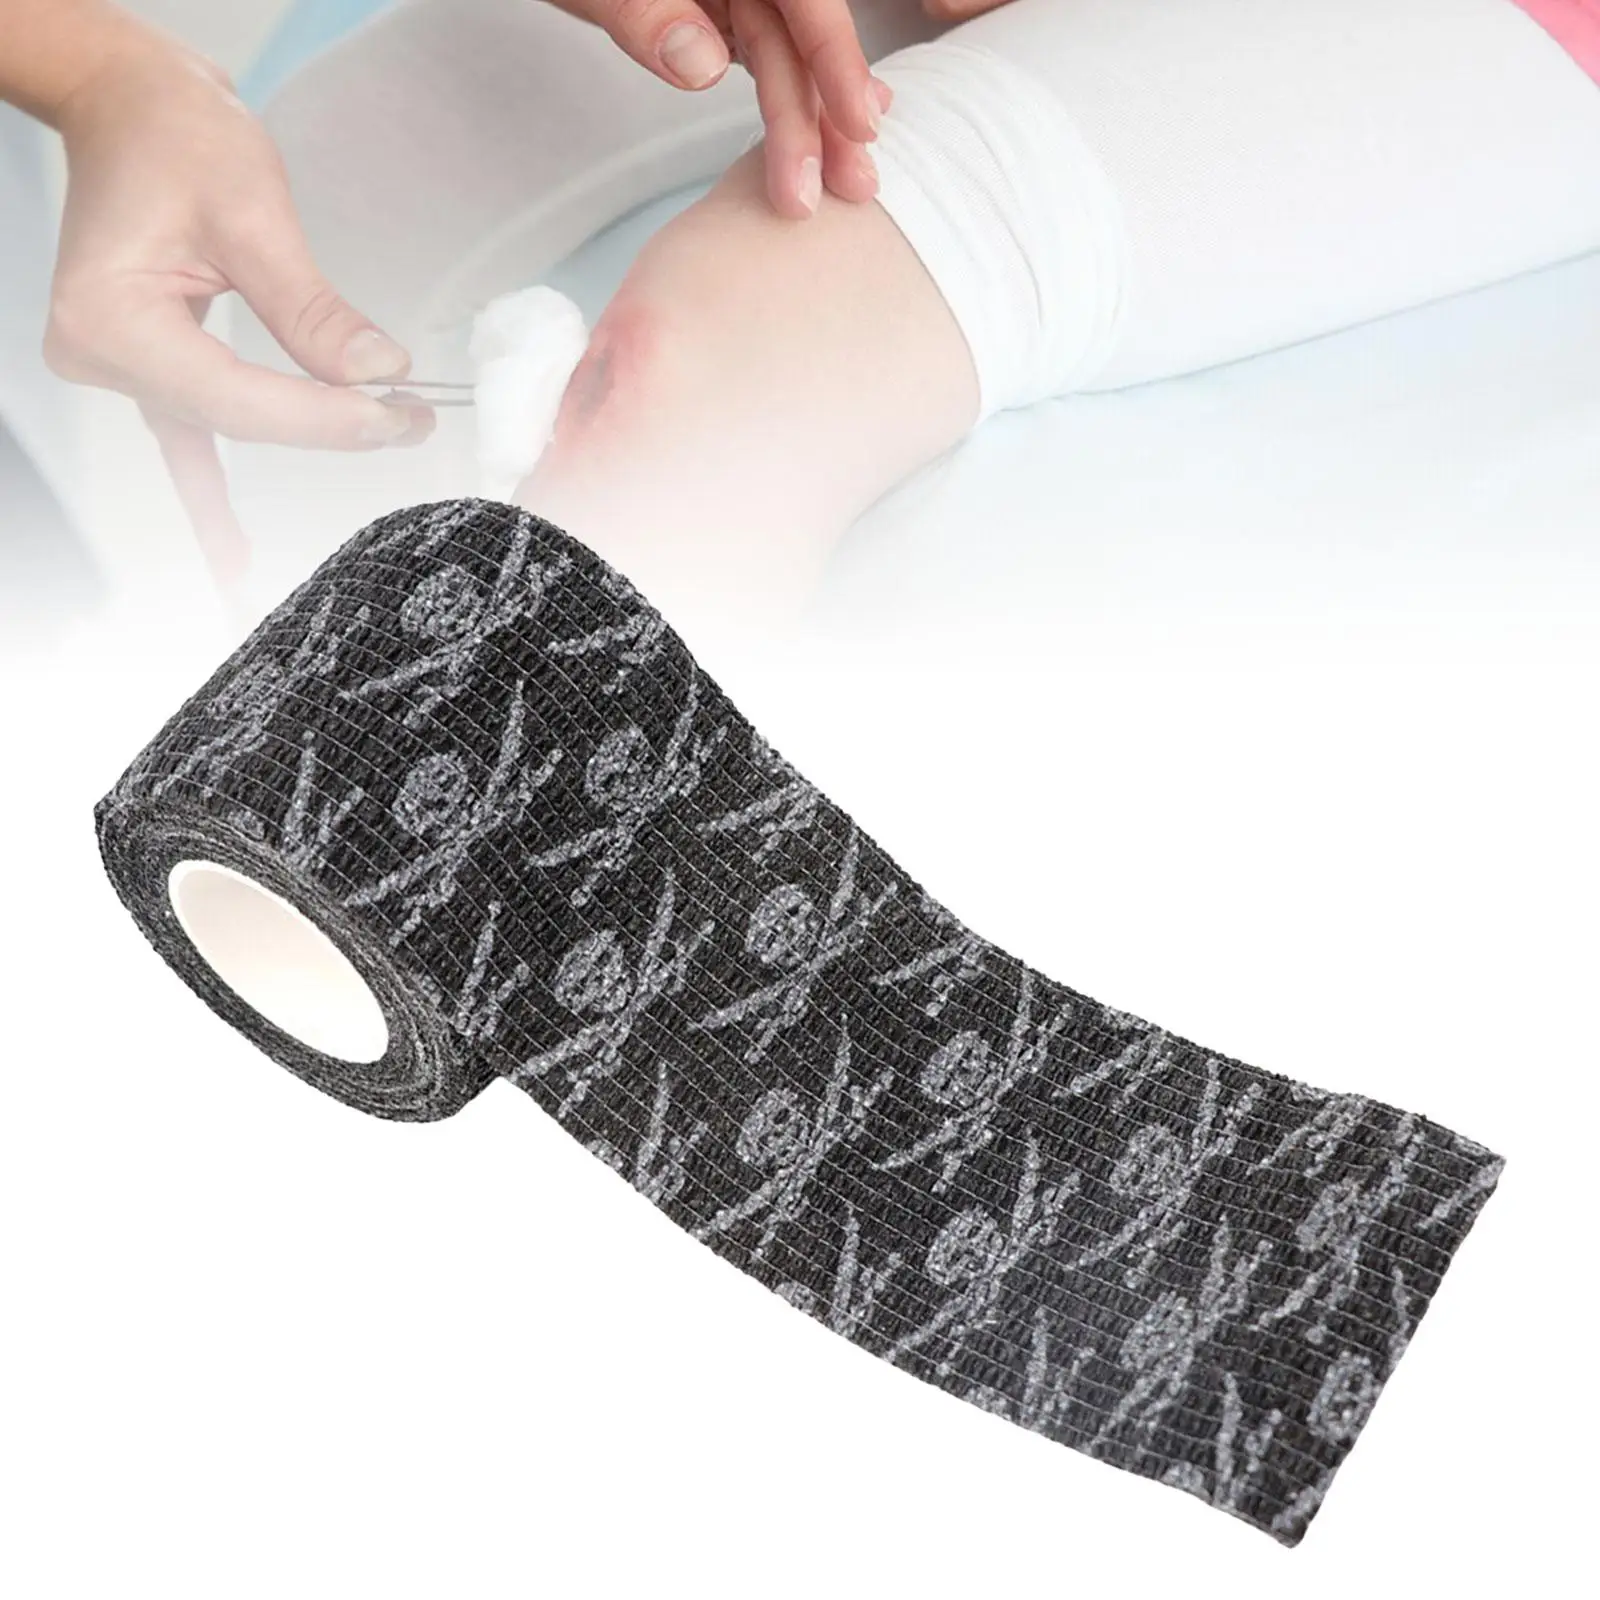 Self Adhesive Bandage Wrap 1Length 4.8ft Cohesive Bandage First Aid Supplies Pet